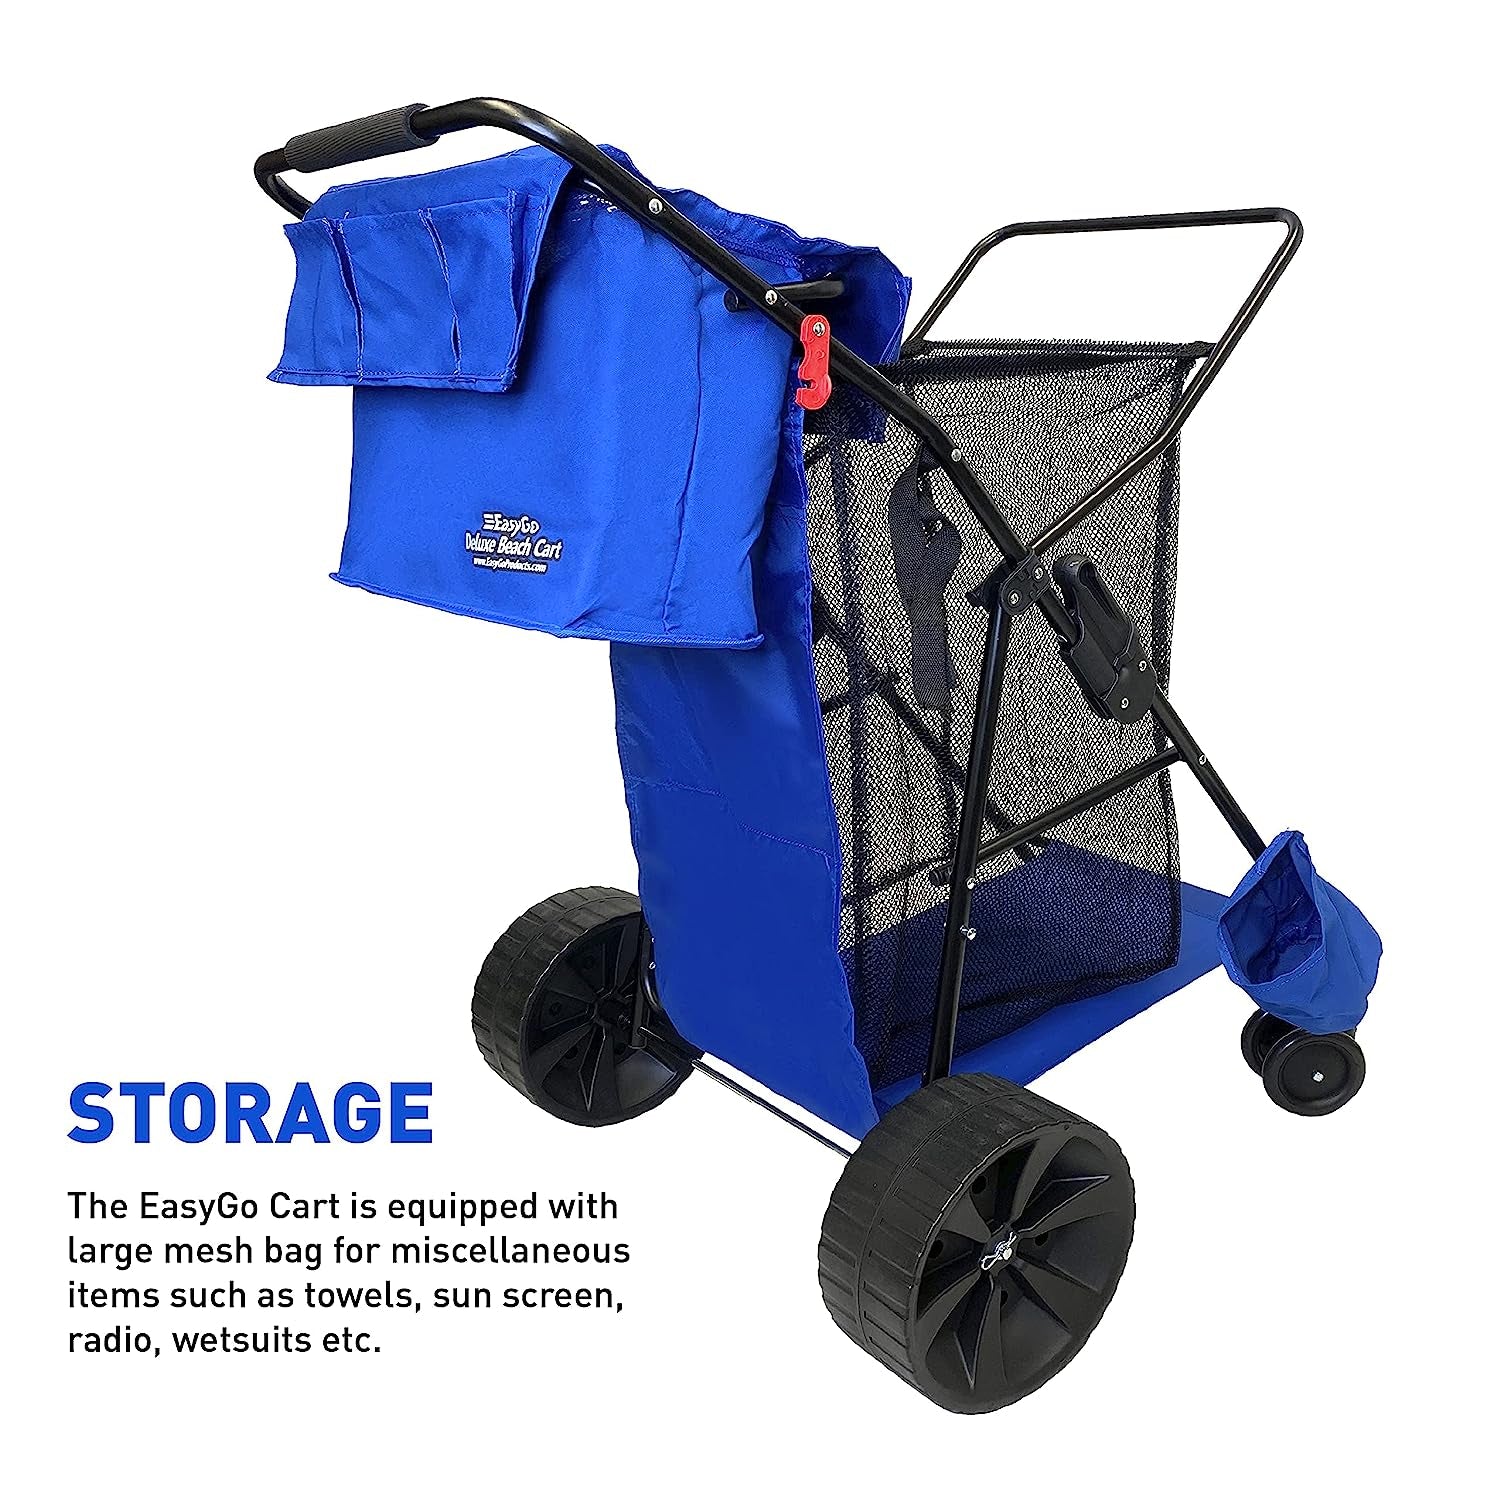 Beach Umbrella Wagon Cart Deluxe – Heavy Duty Folding Ocean Utility Cart – Large Sand Wheels – Holds 4 Beach Chairs – Storage Pouch - Beach Umbrella Holder –Removable Beach Bag - Solid Blue